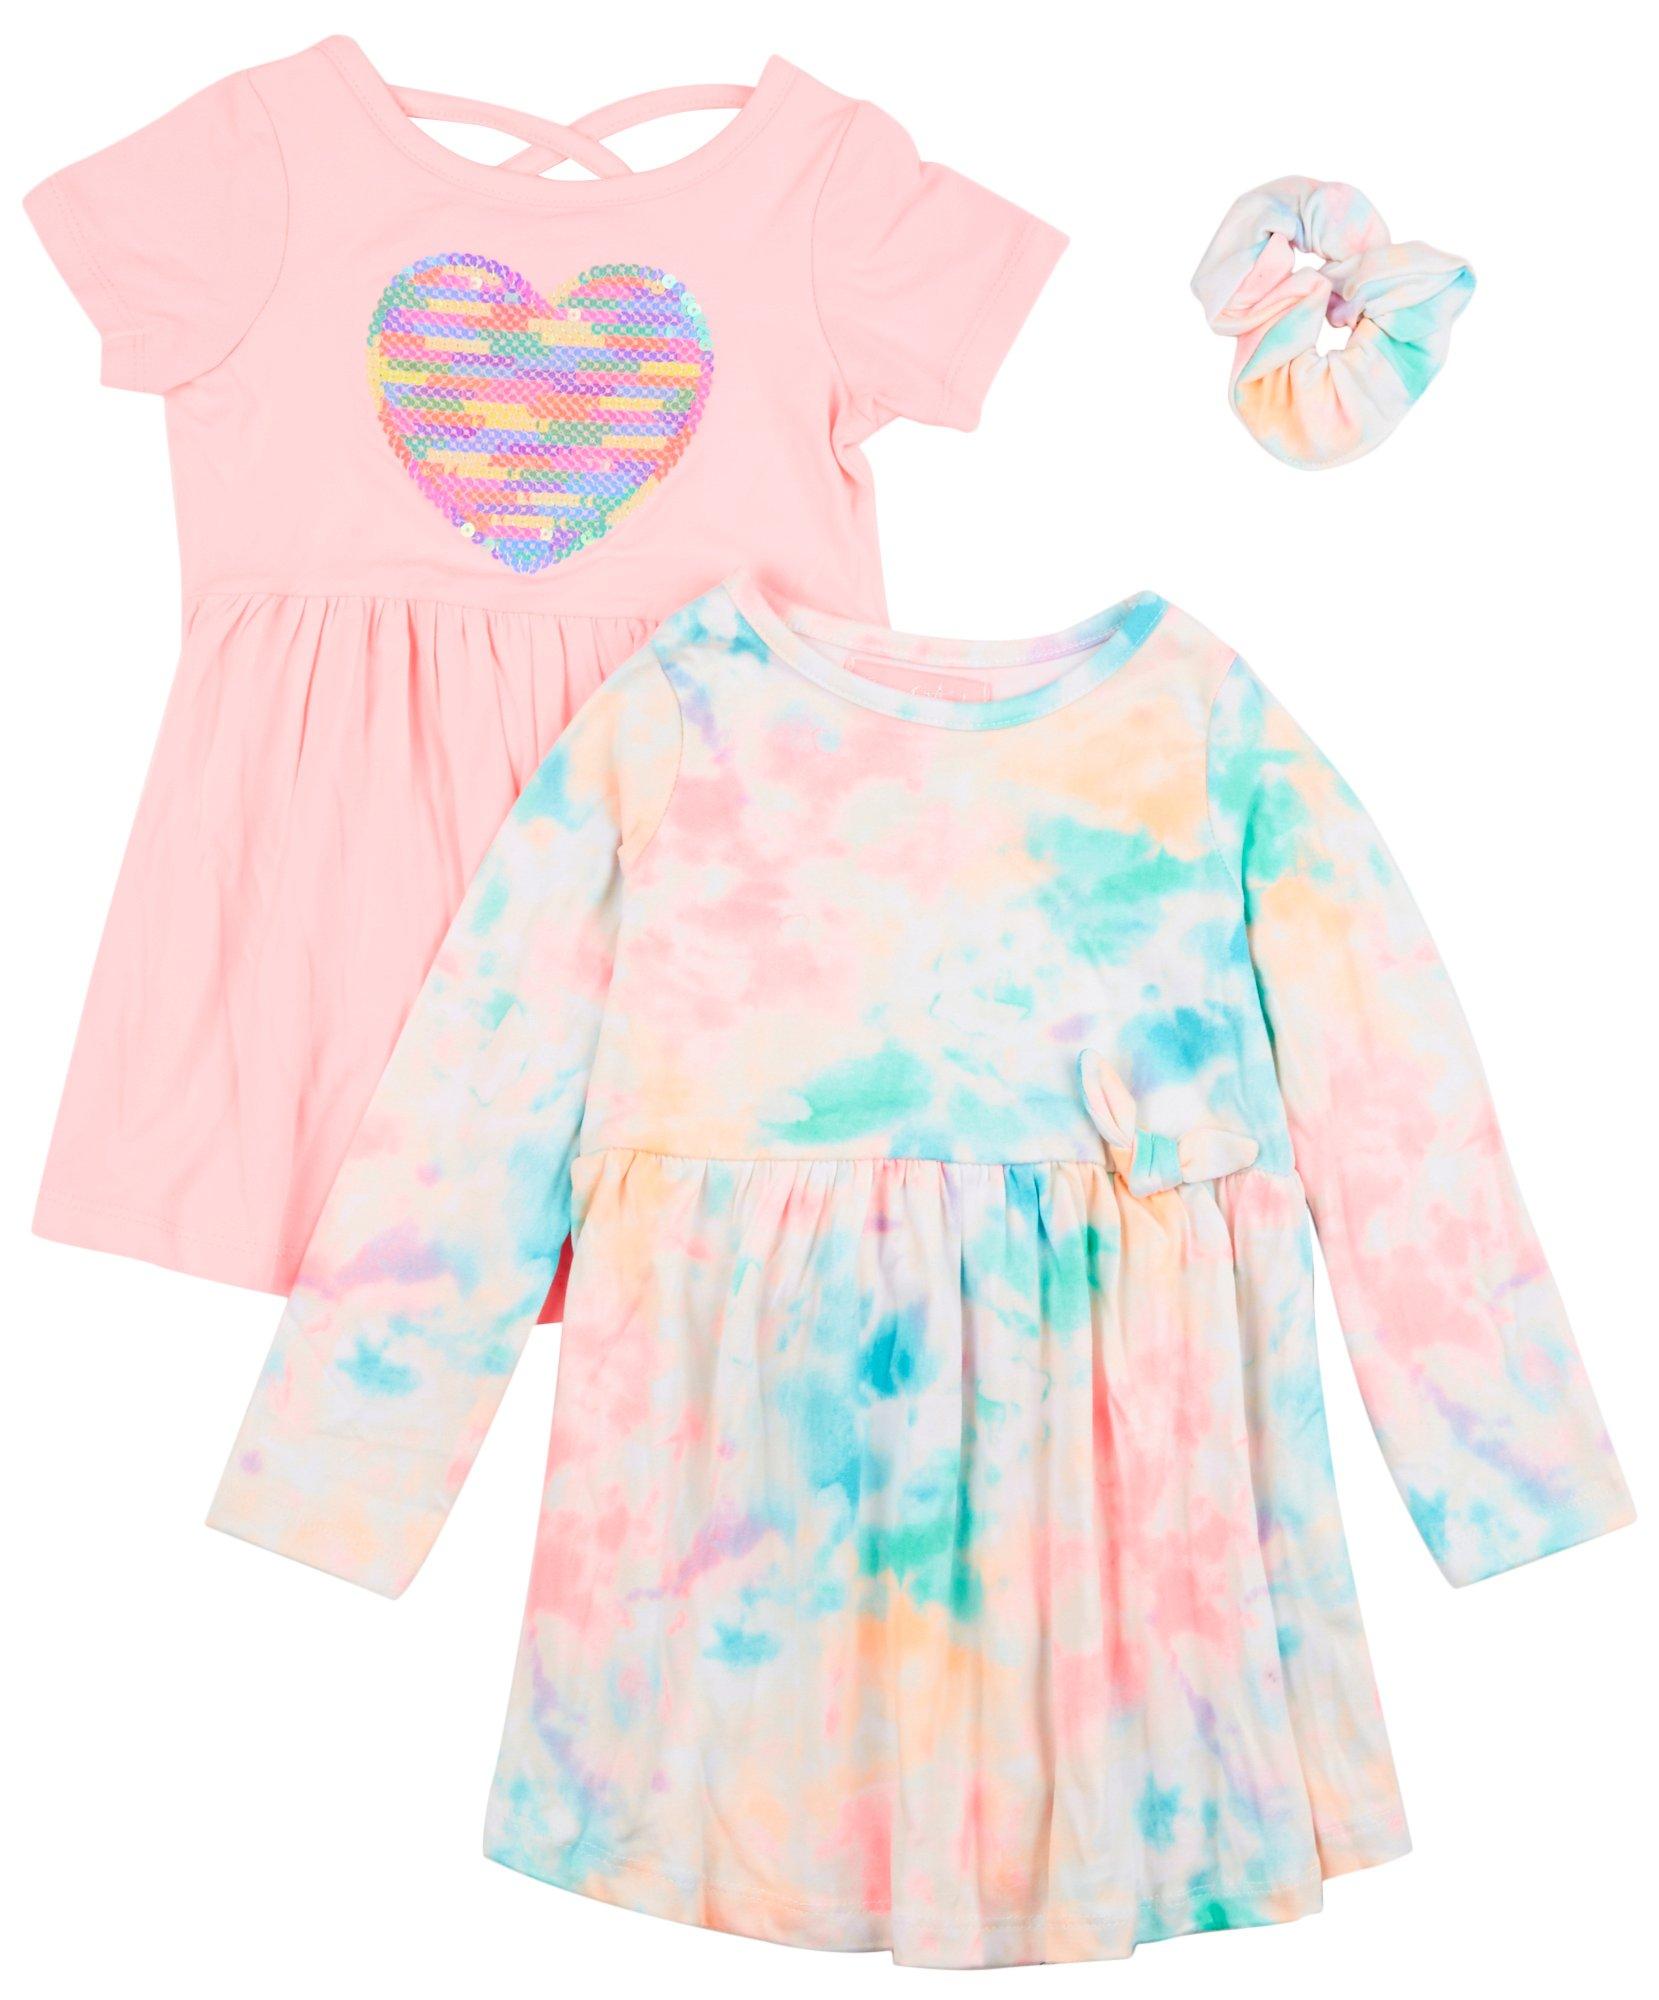 Toddler Girls 3 Pc. Sequin & Tie Dye Dress Set